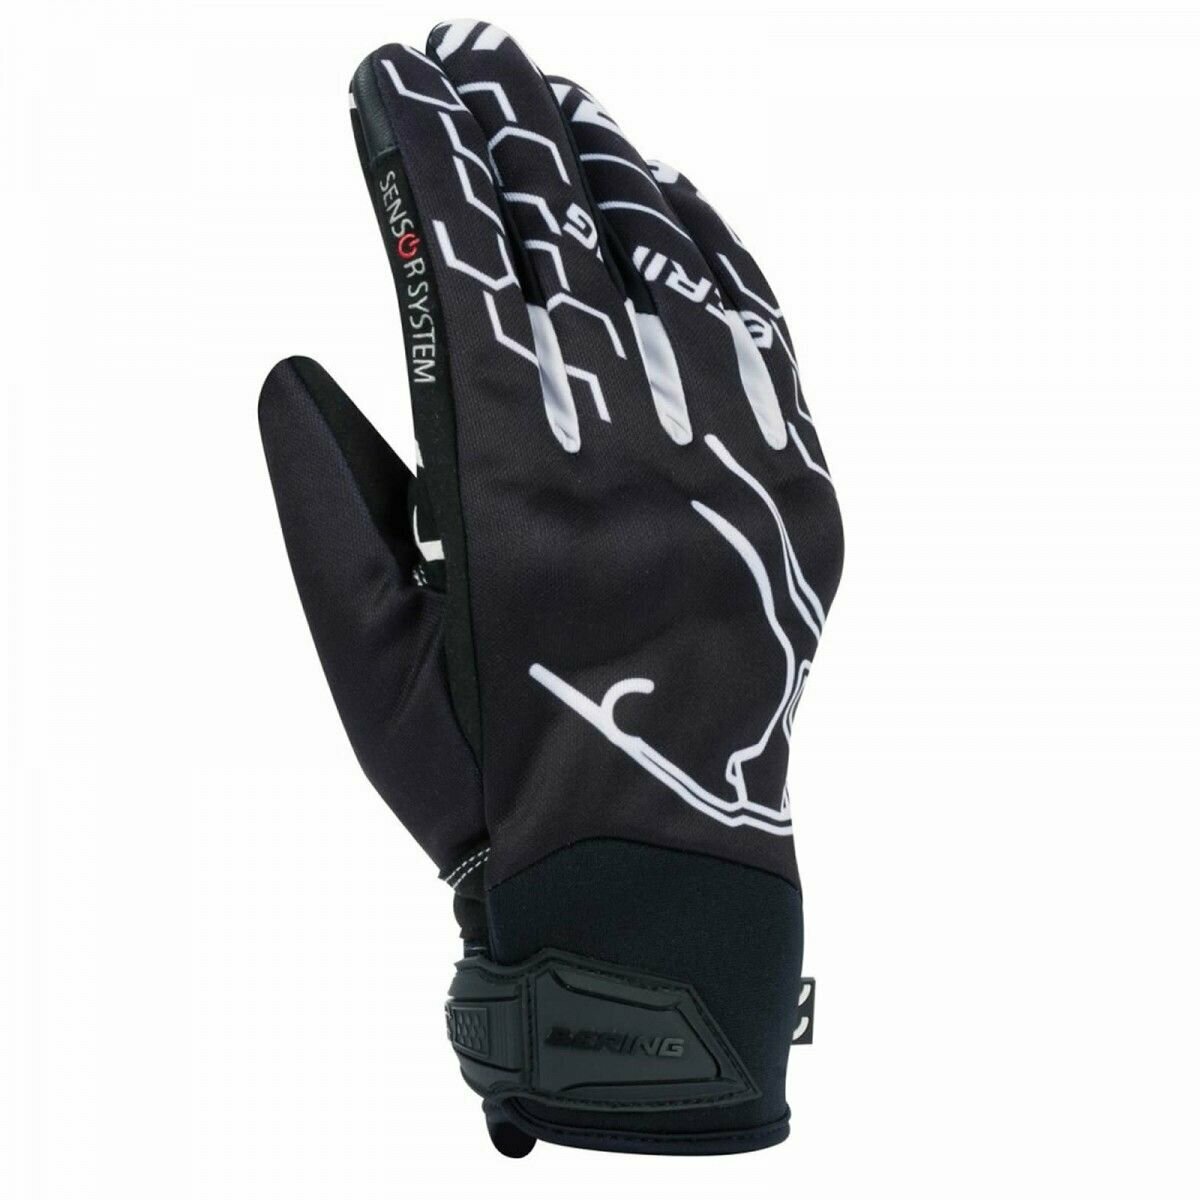 Мотоперчатки мужские летние текстильные Bering WALSHE Black/White, T9